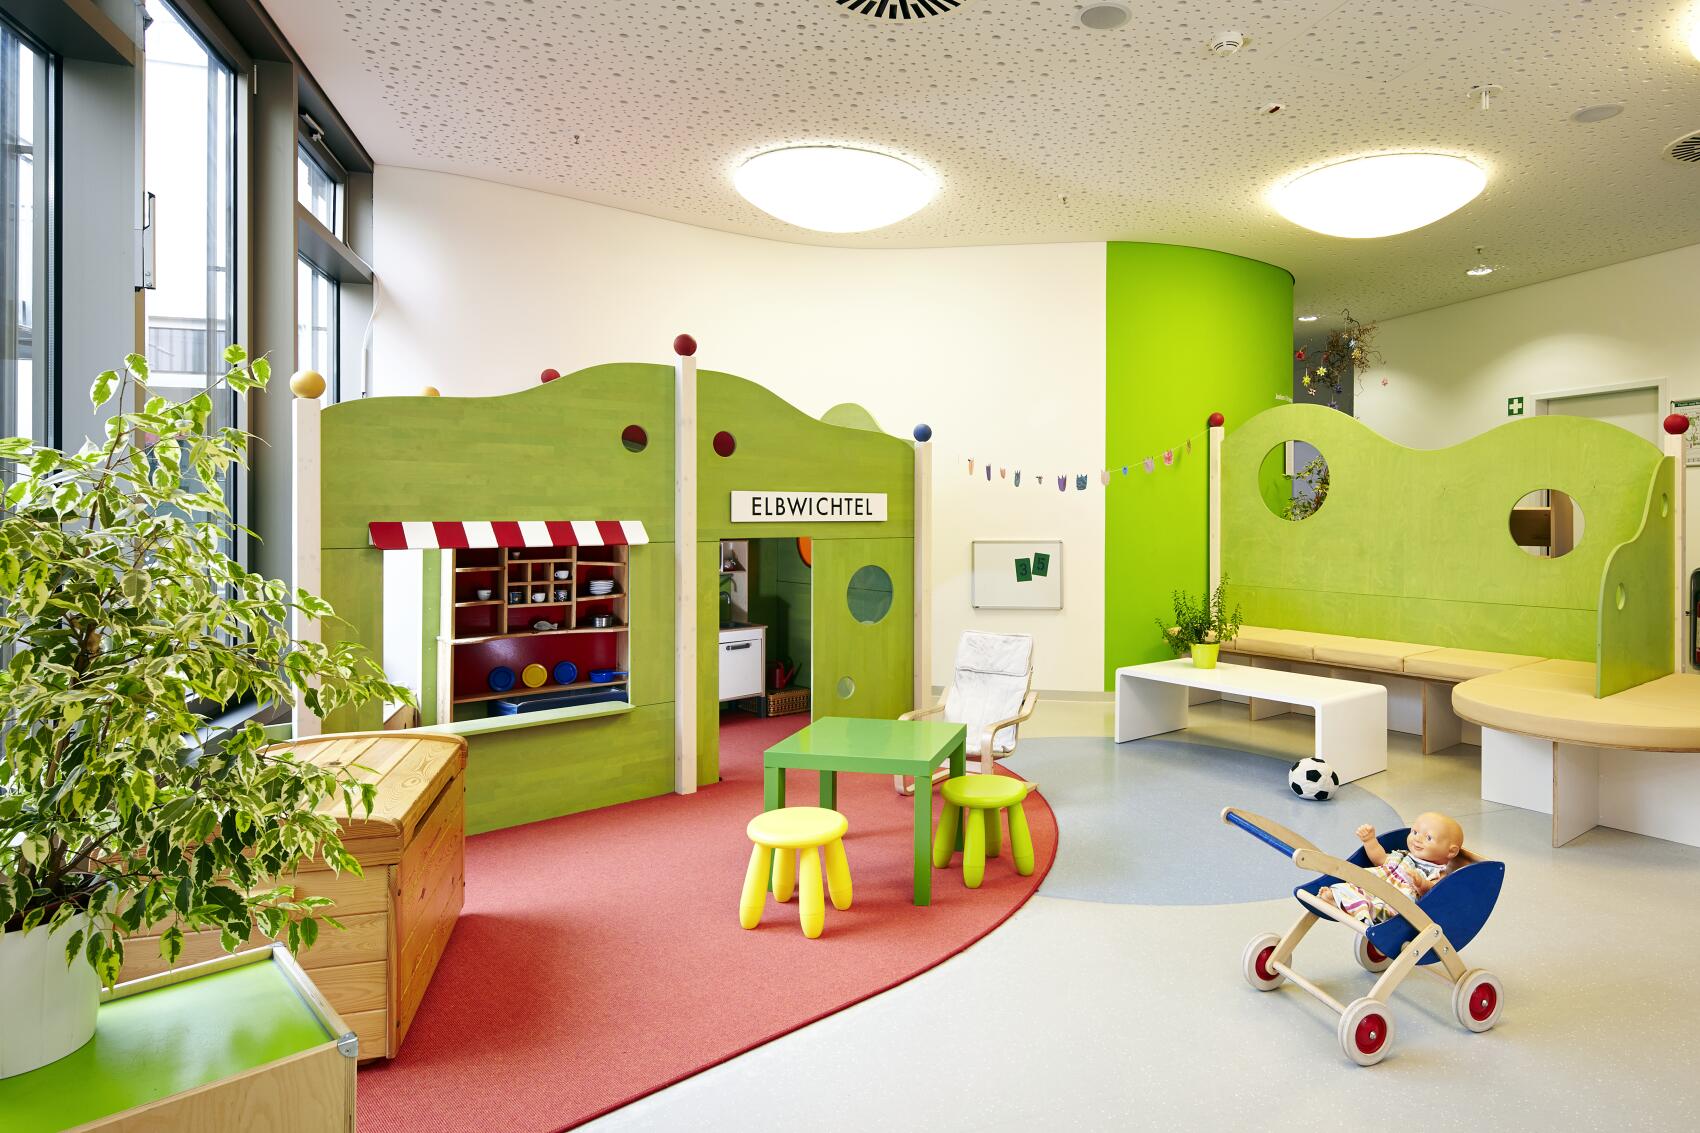 FRÖBEL-Kindergarten Elbwichtel, © 2022 FRÖBEL e.V. Alle Rechte vorbehalten